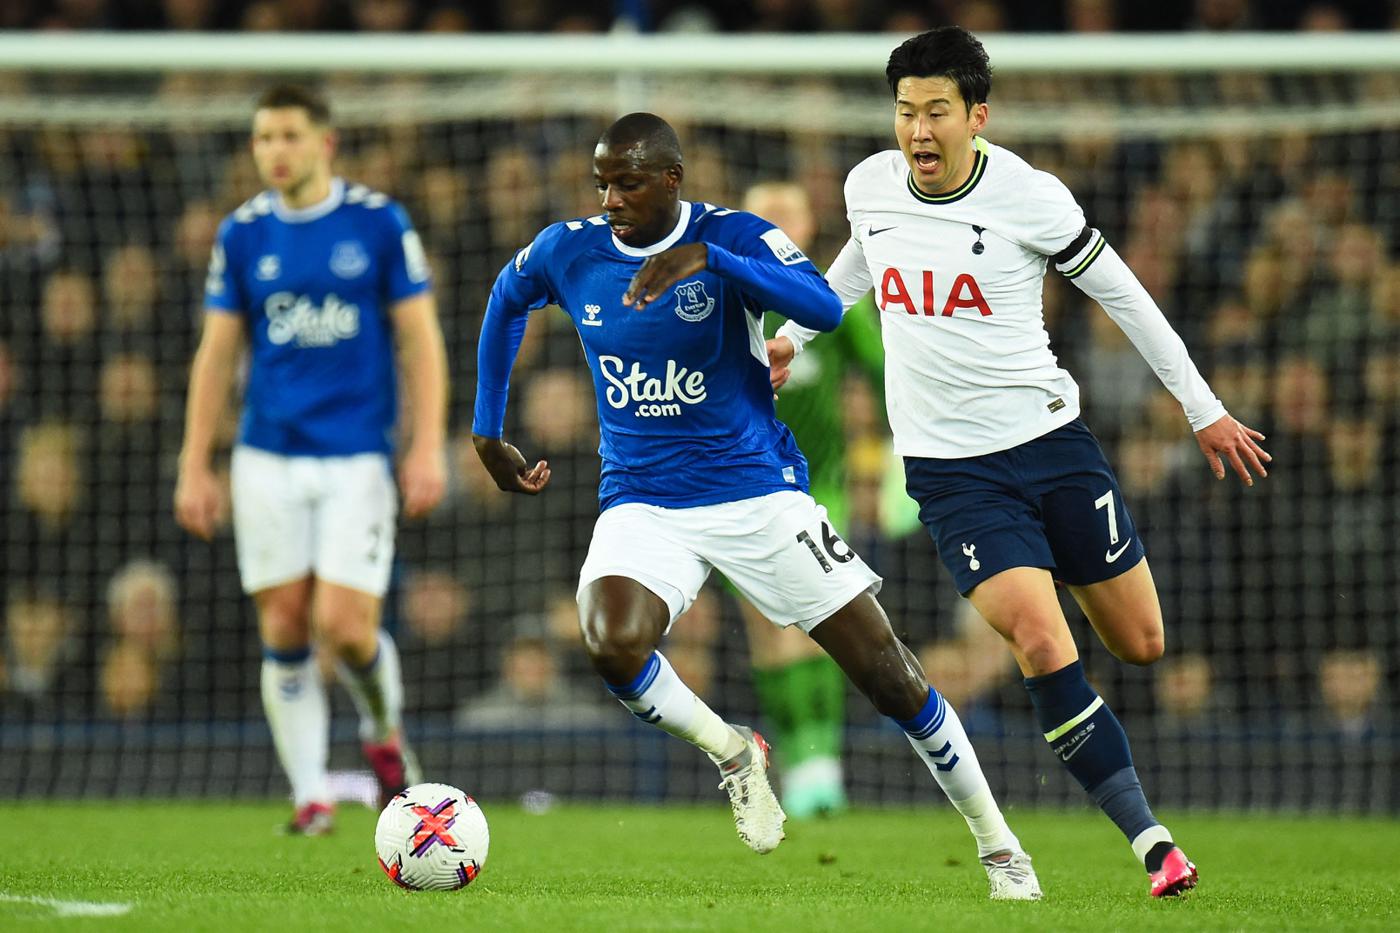 Everton v Tottenham - 1:1. English Championship, round 29. Match review, statistics